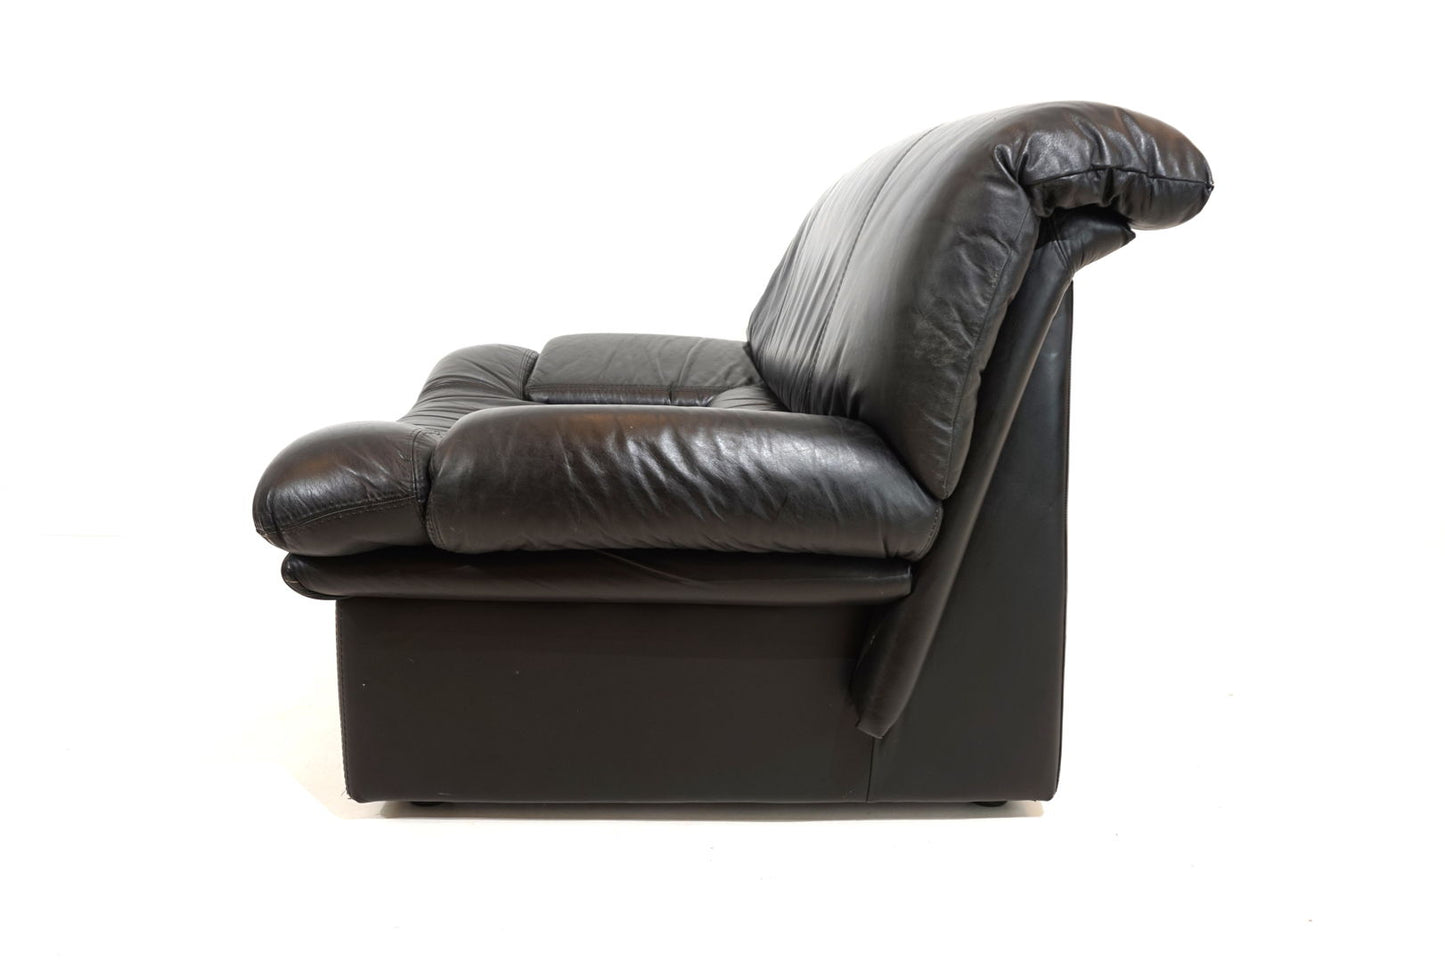 Nicoletti Salotti Ambassador leather armchair set of 2 for Avanti